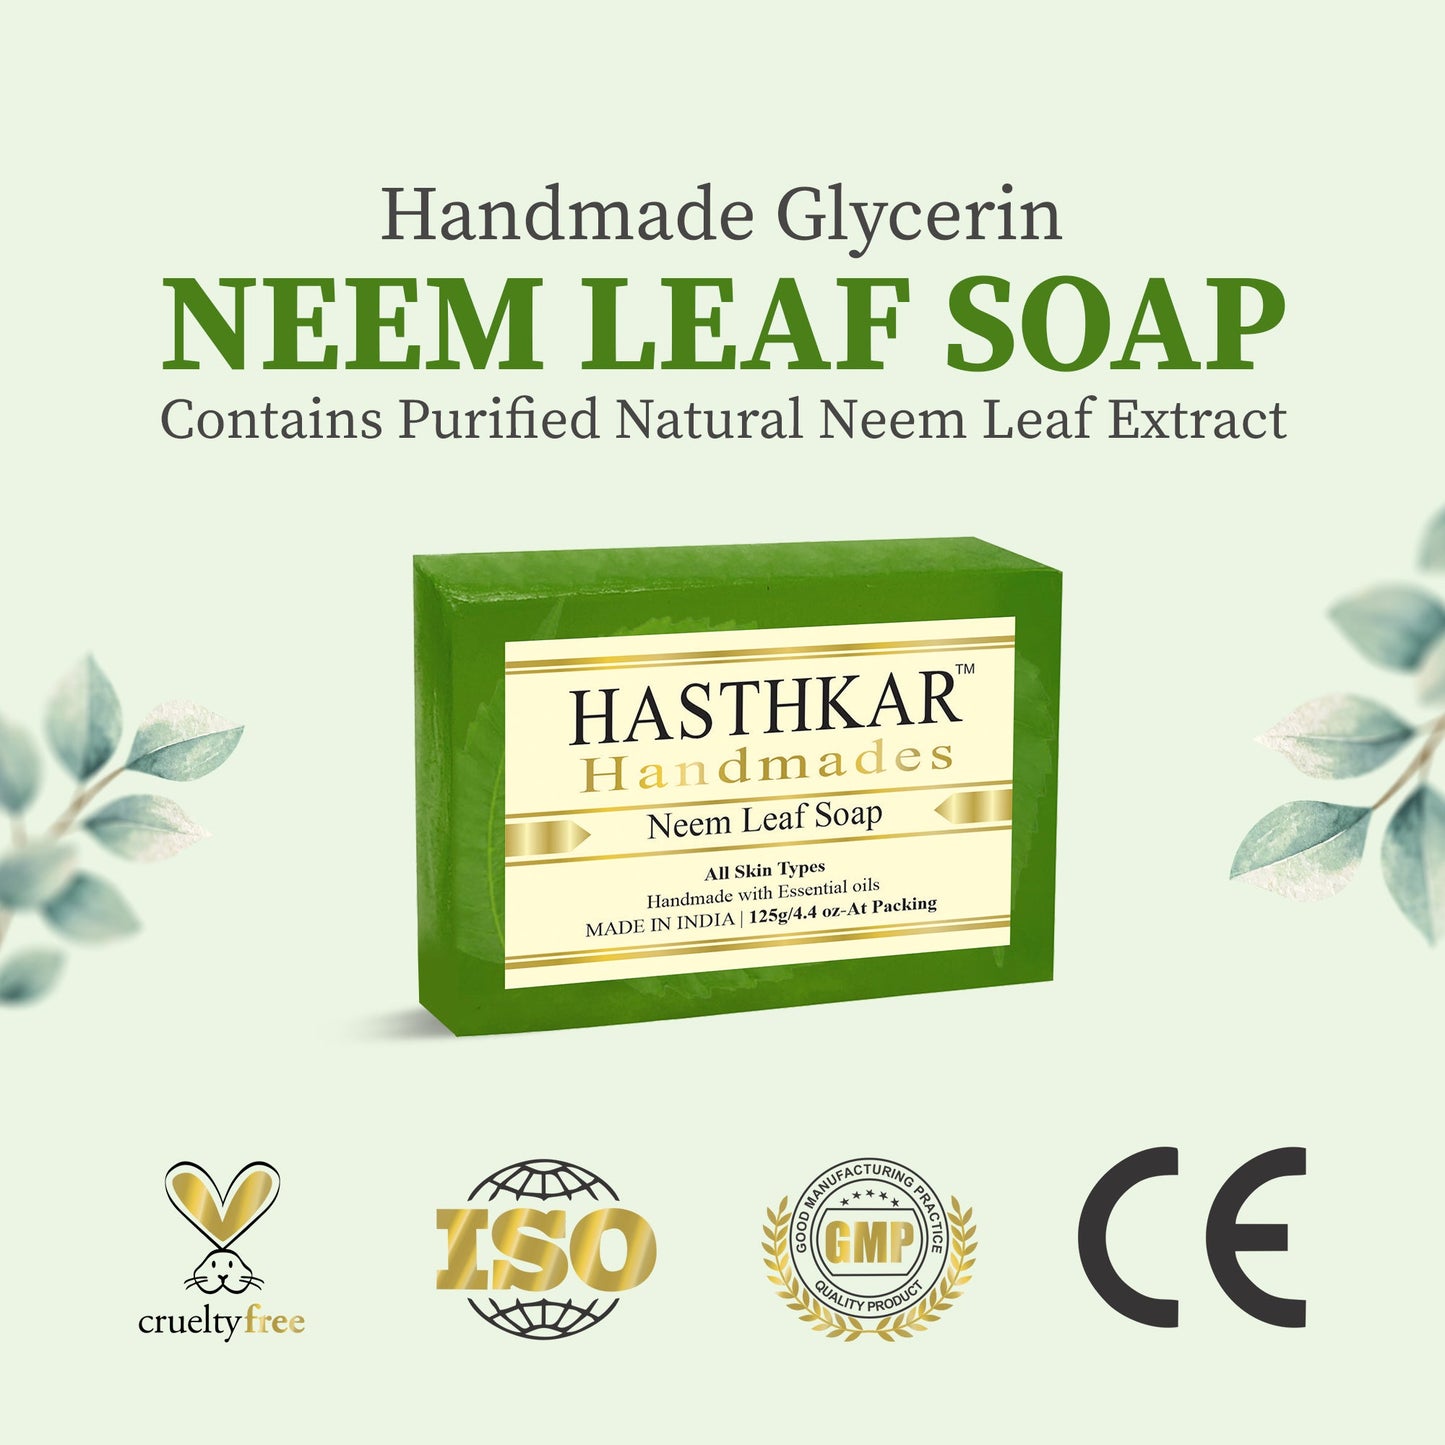 Hasthkar Handmades Glycerine Neem Leaf Soap For Antibacterial Clearing Up Skin Irritations And Acne | Chock Full Of Antioxidants - 125Gm